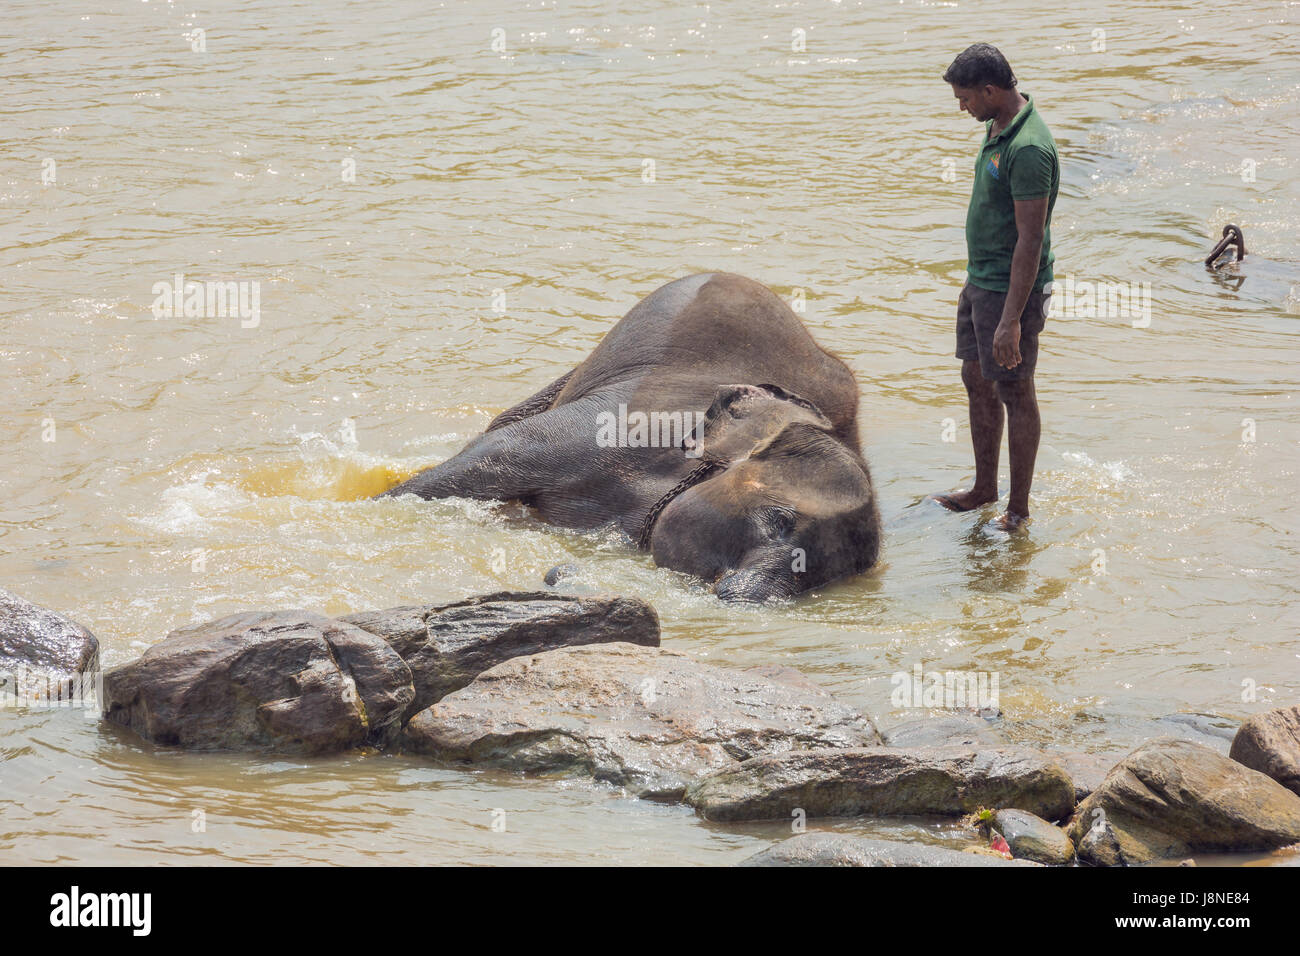 Editorial: PINNAWALA, SRI LANKA, April 7, 2017 - Animal keeper watching elephant enjoying its bath, in the river Stock Photo